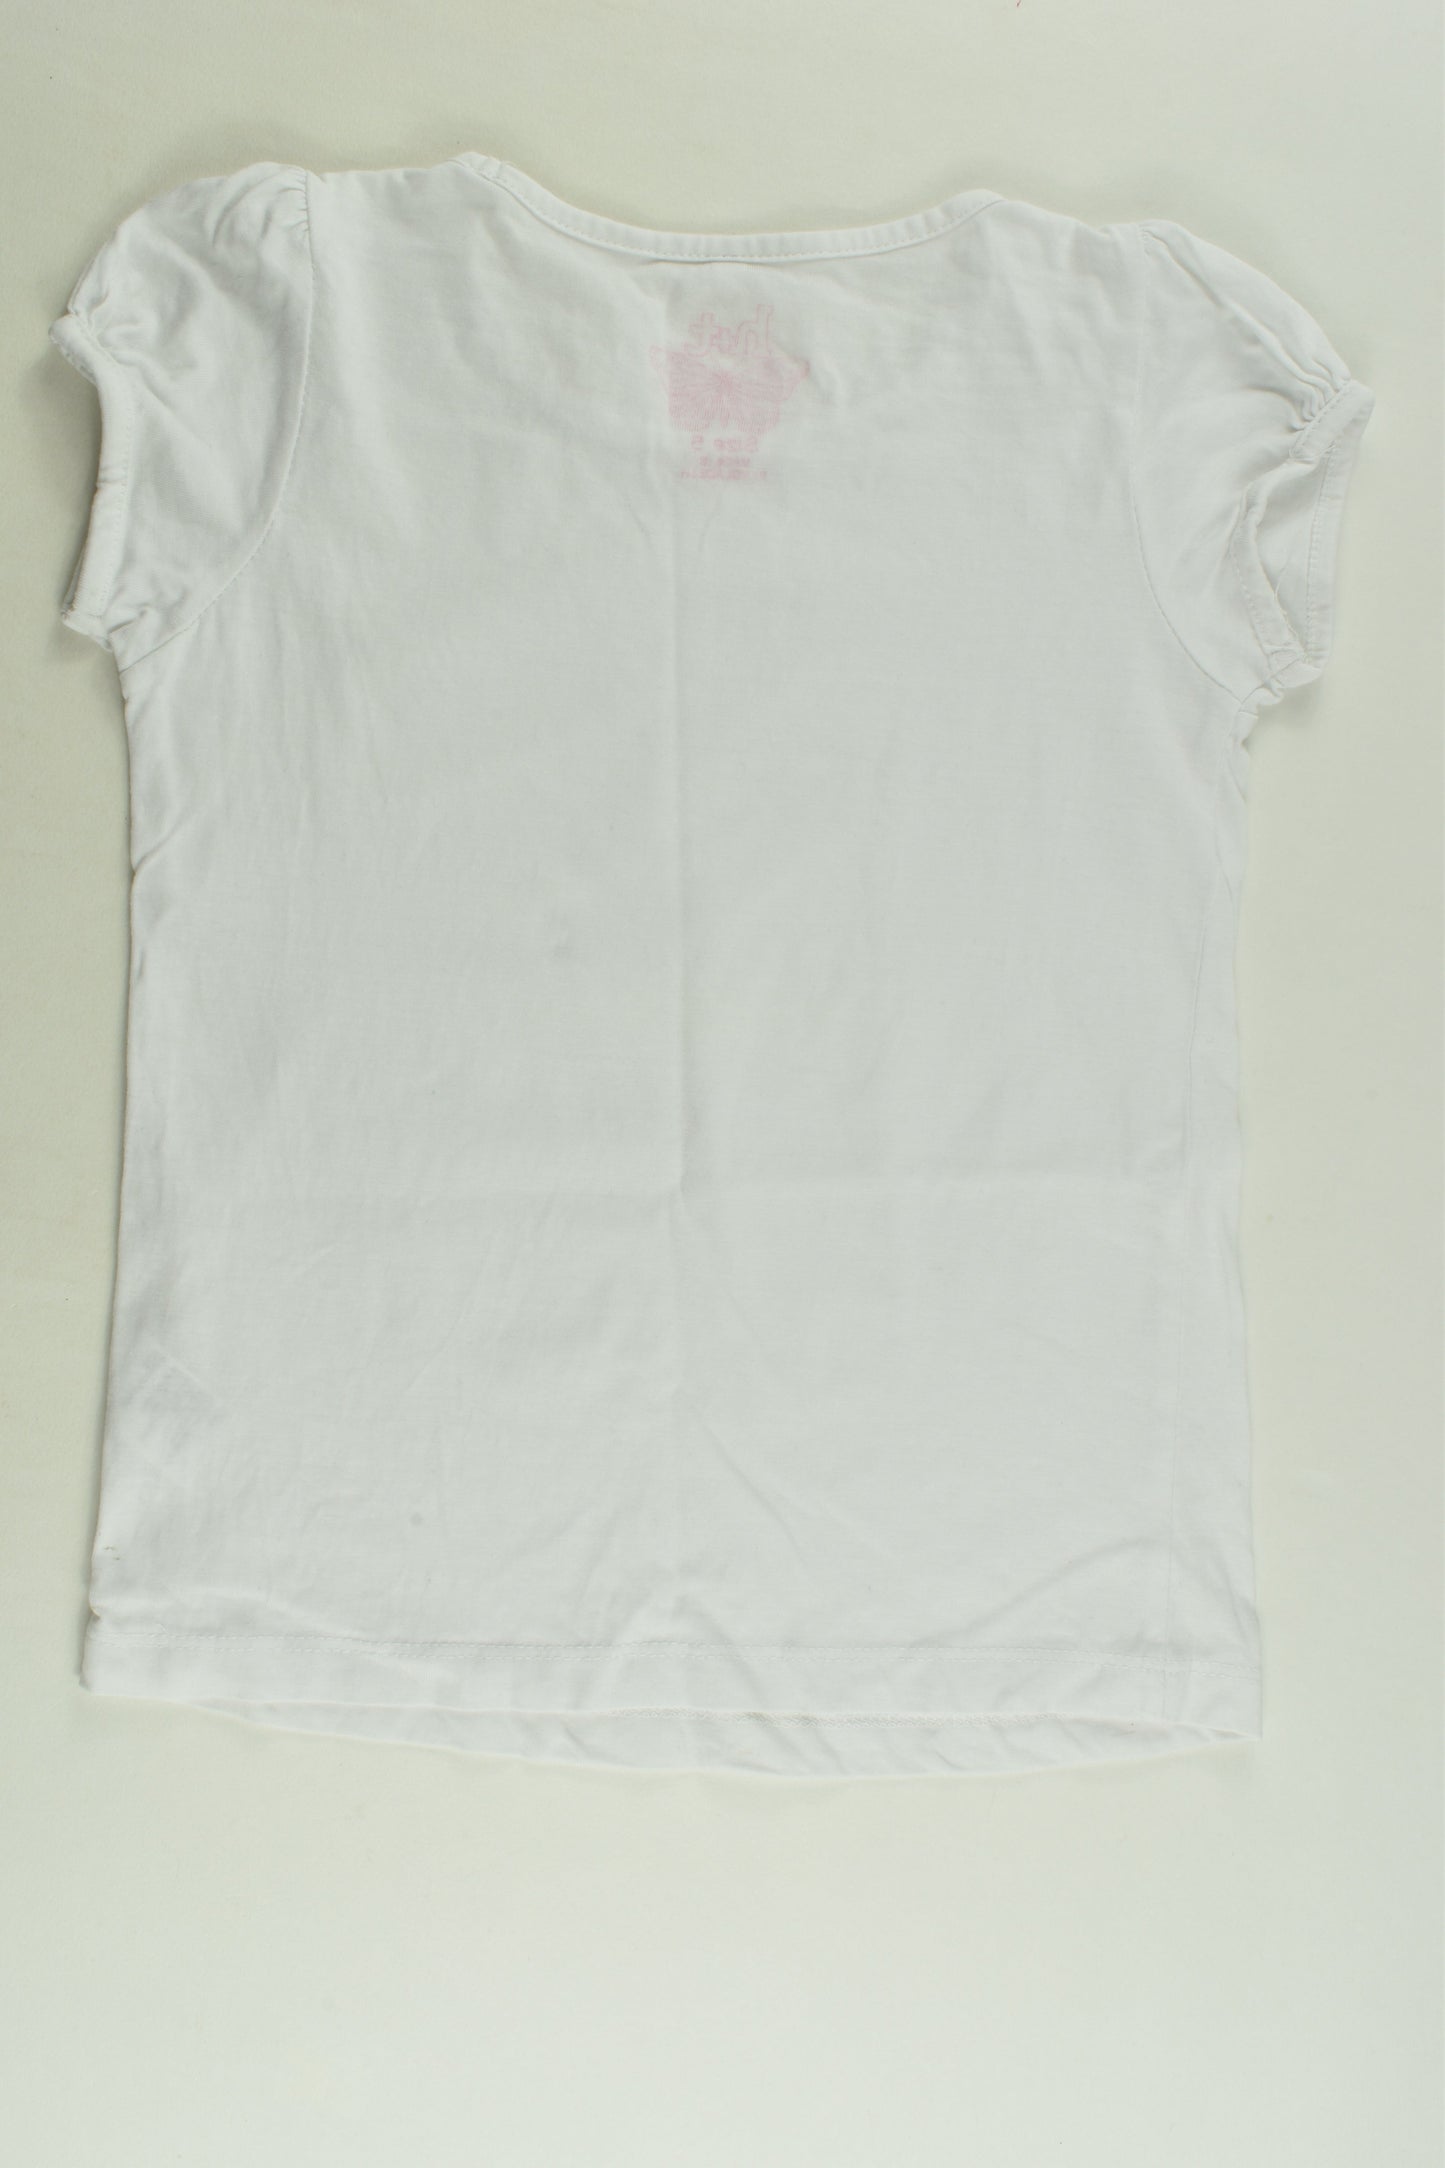 H&T Size 5 T-shirt